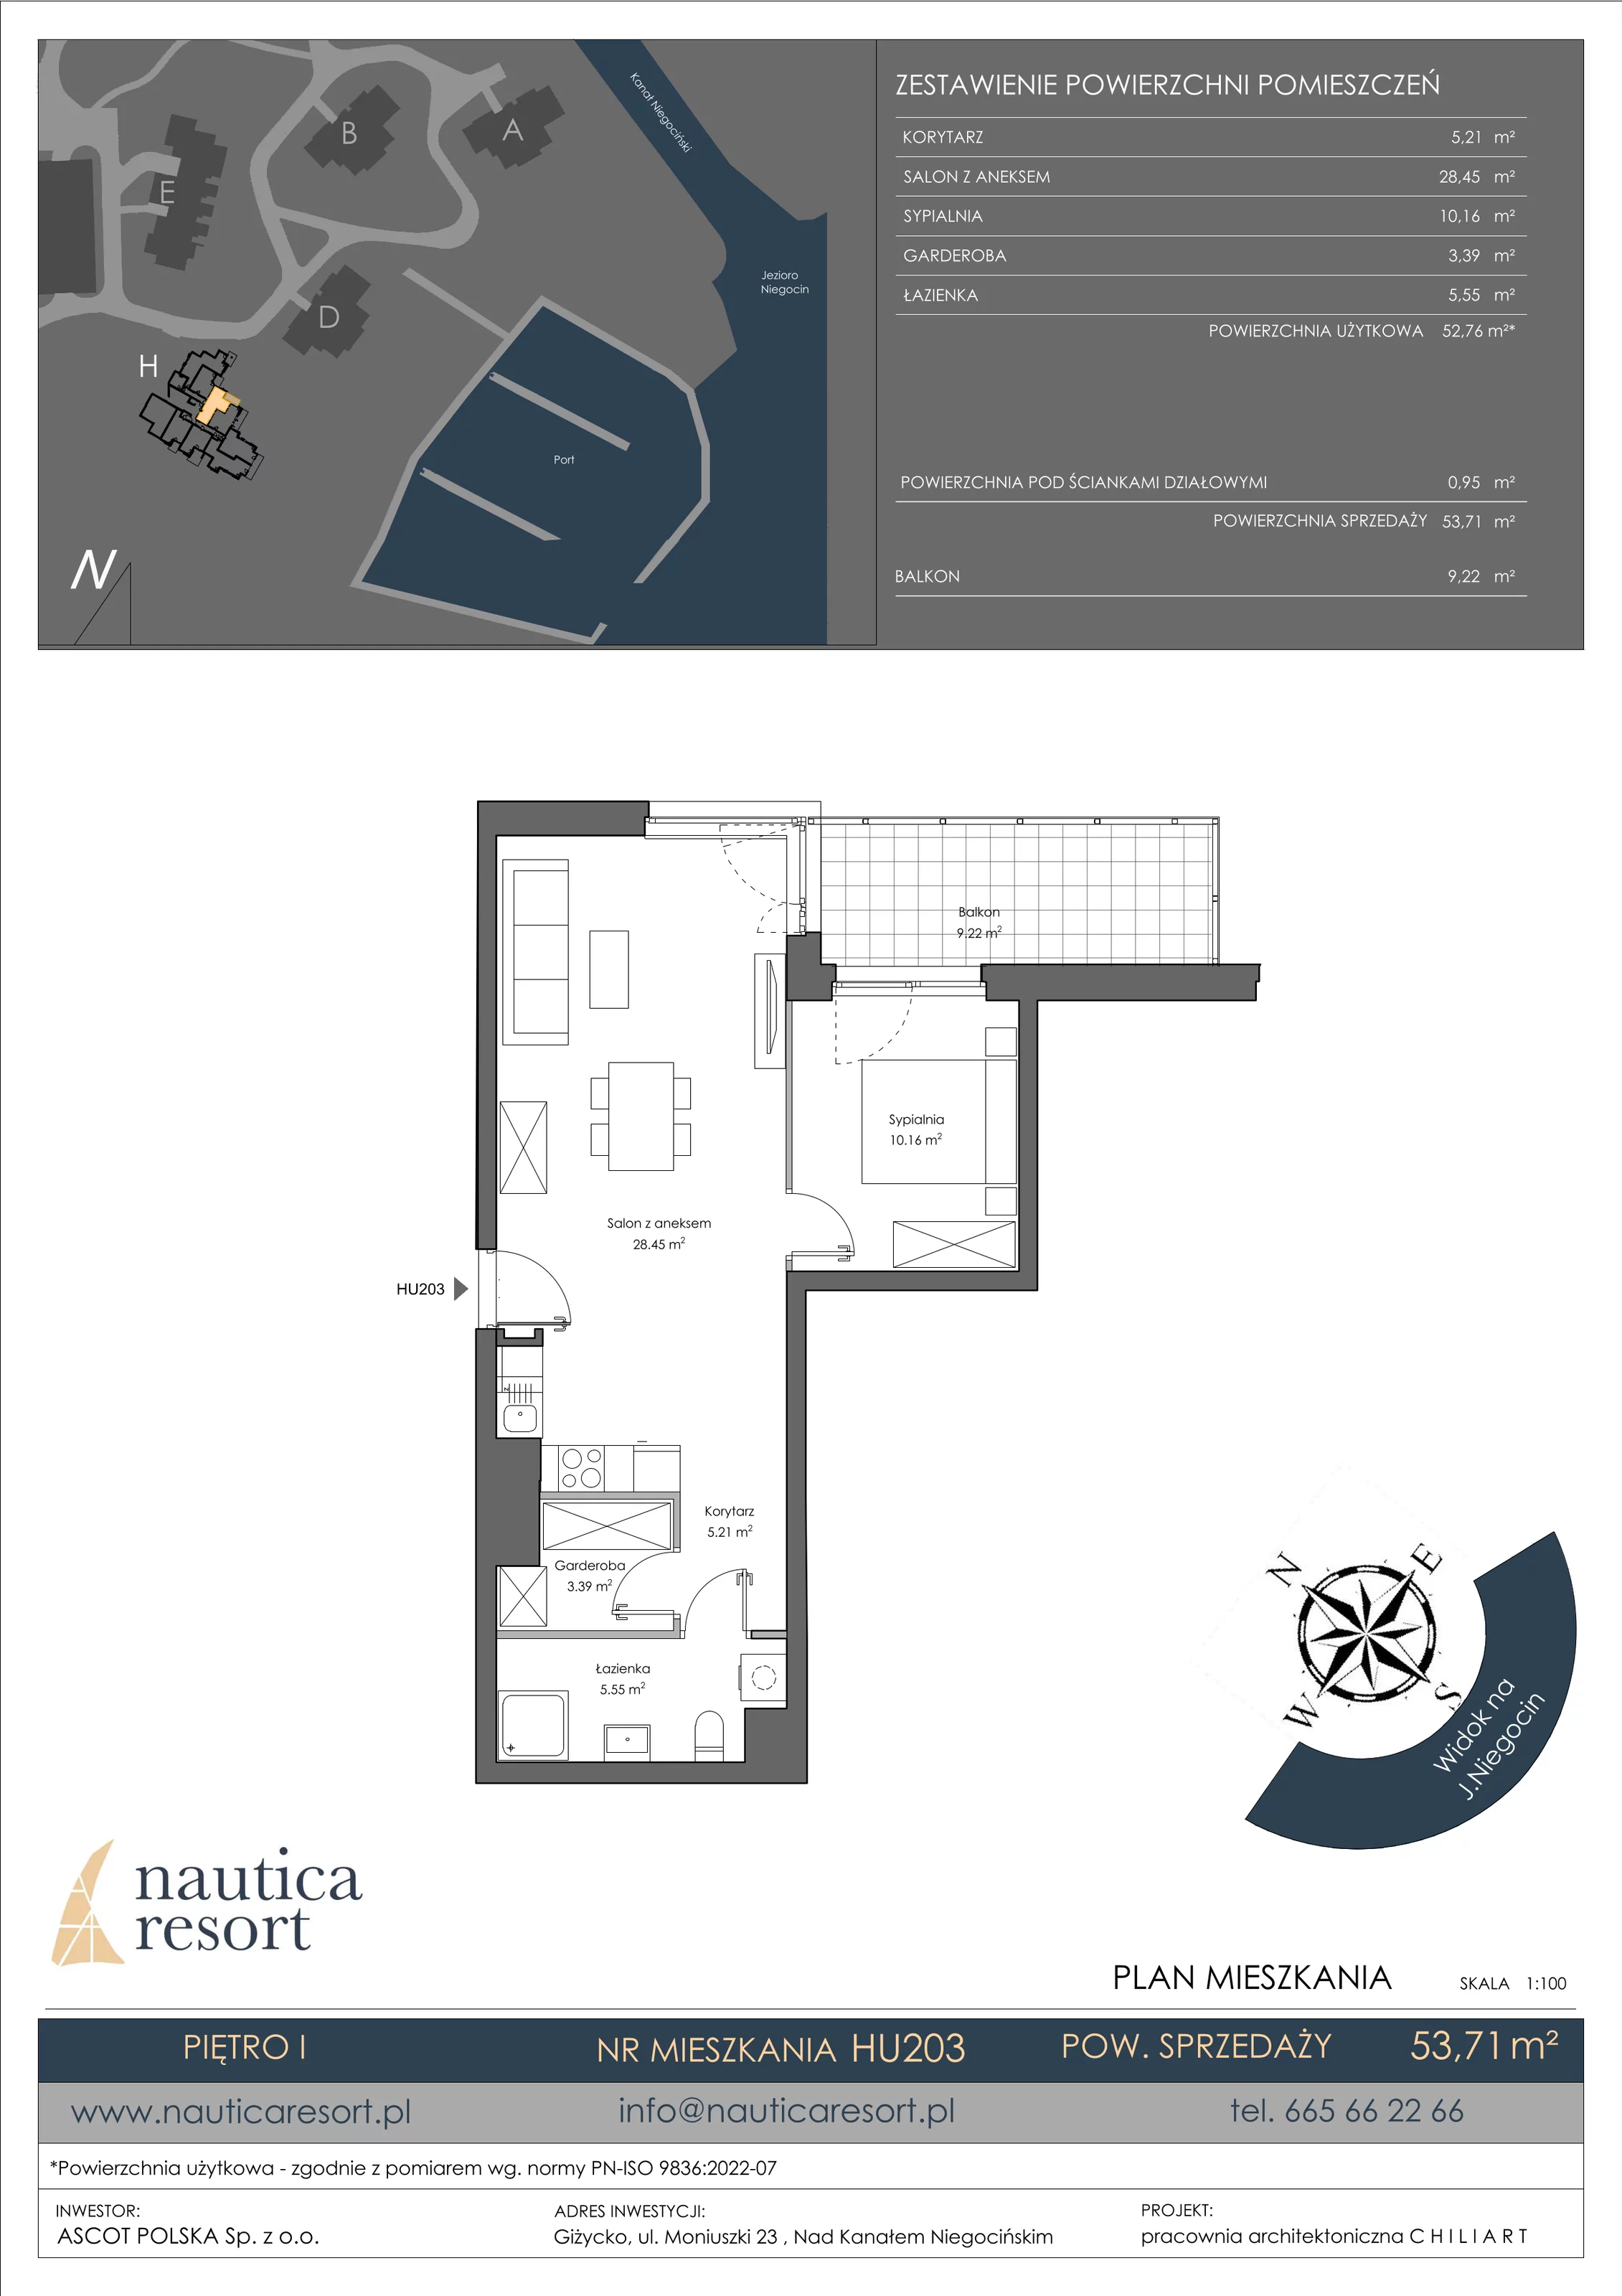 Apartament 53,71 m², piętro 1, oferta nr H.203, Nautica Resort, Giżycko, ul. Moniuszki 23